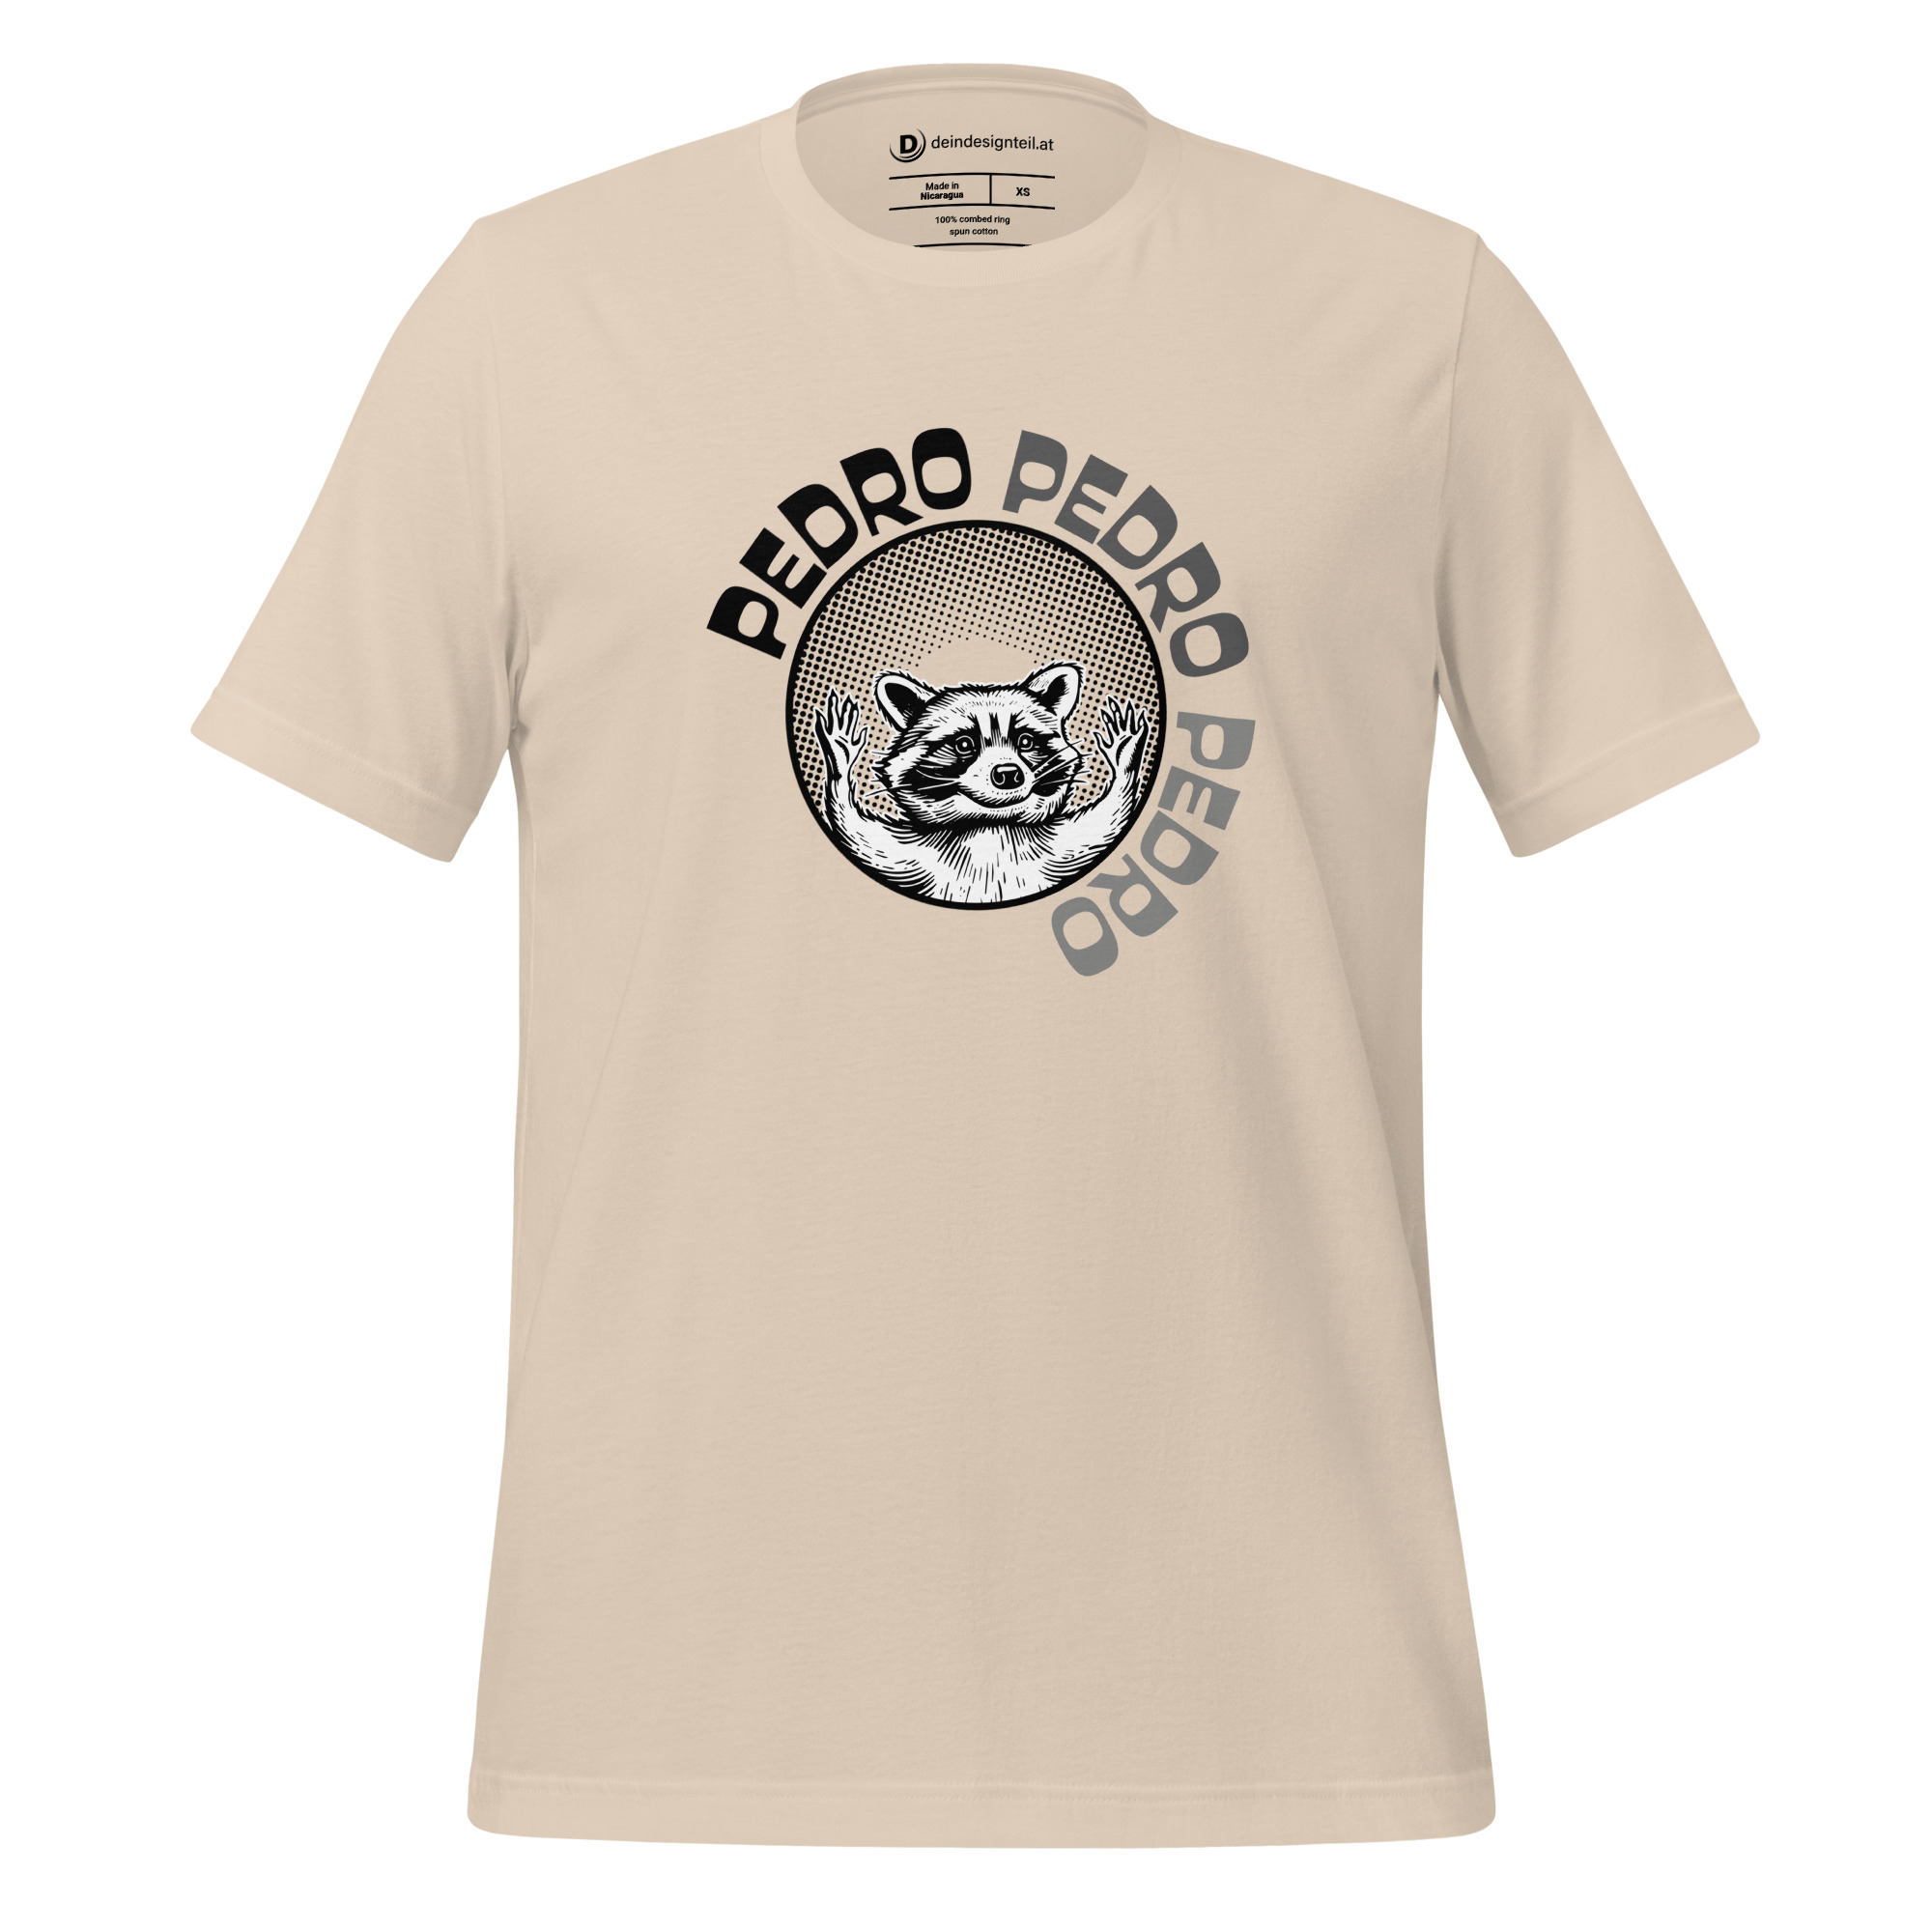 Pedro T-Shirt